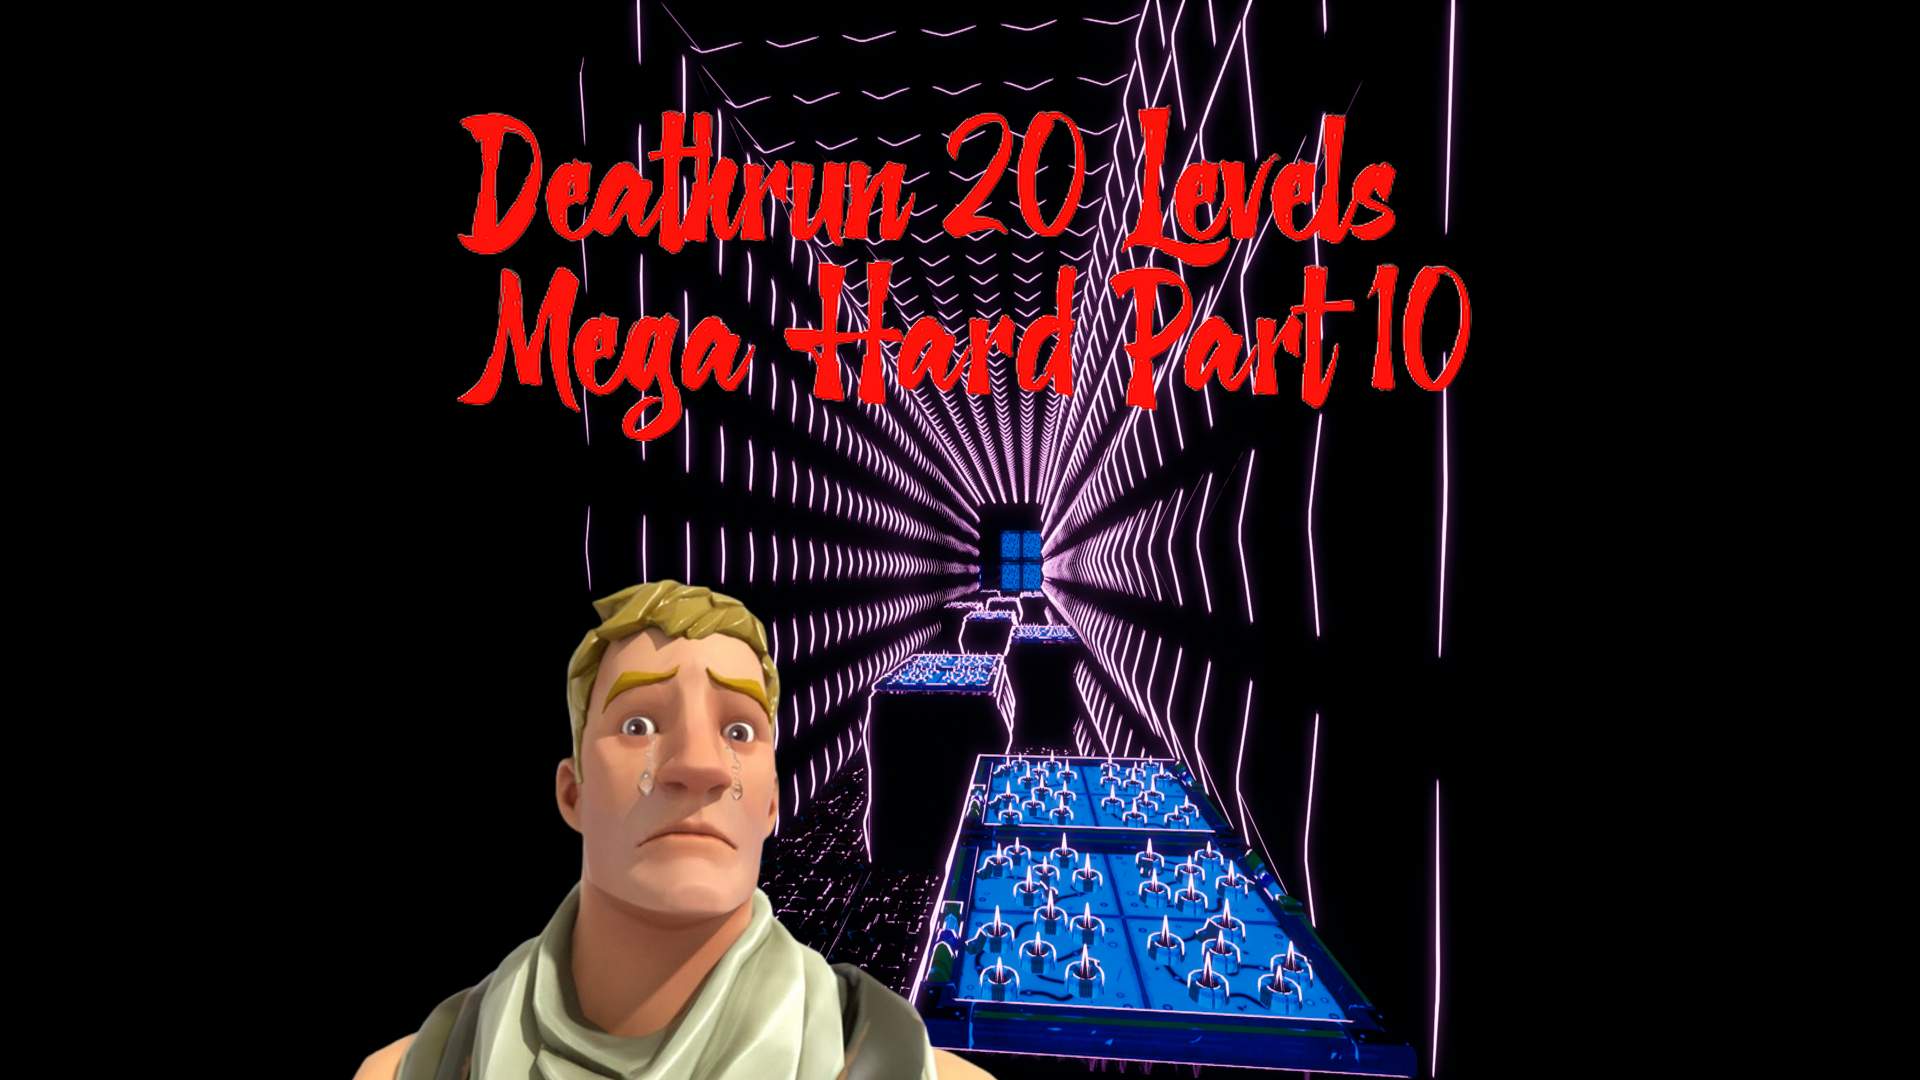 Deathrun 20 Levels Mega Hard Part 10 9367-3019-8175